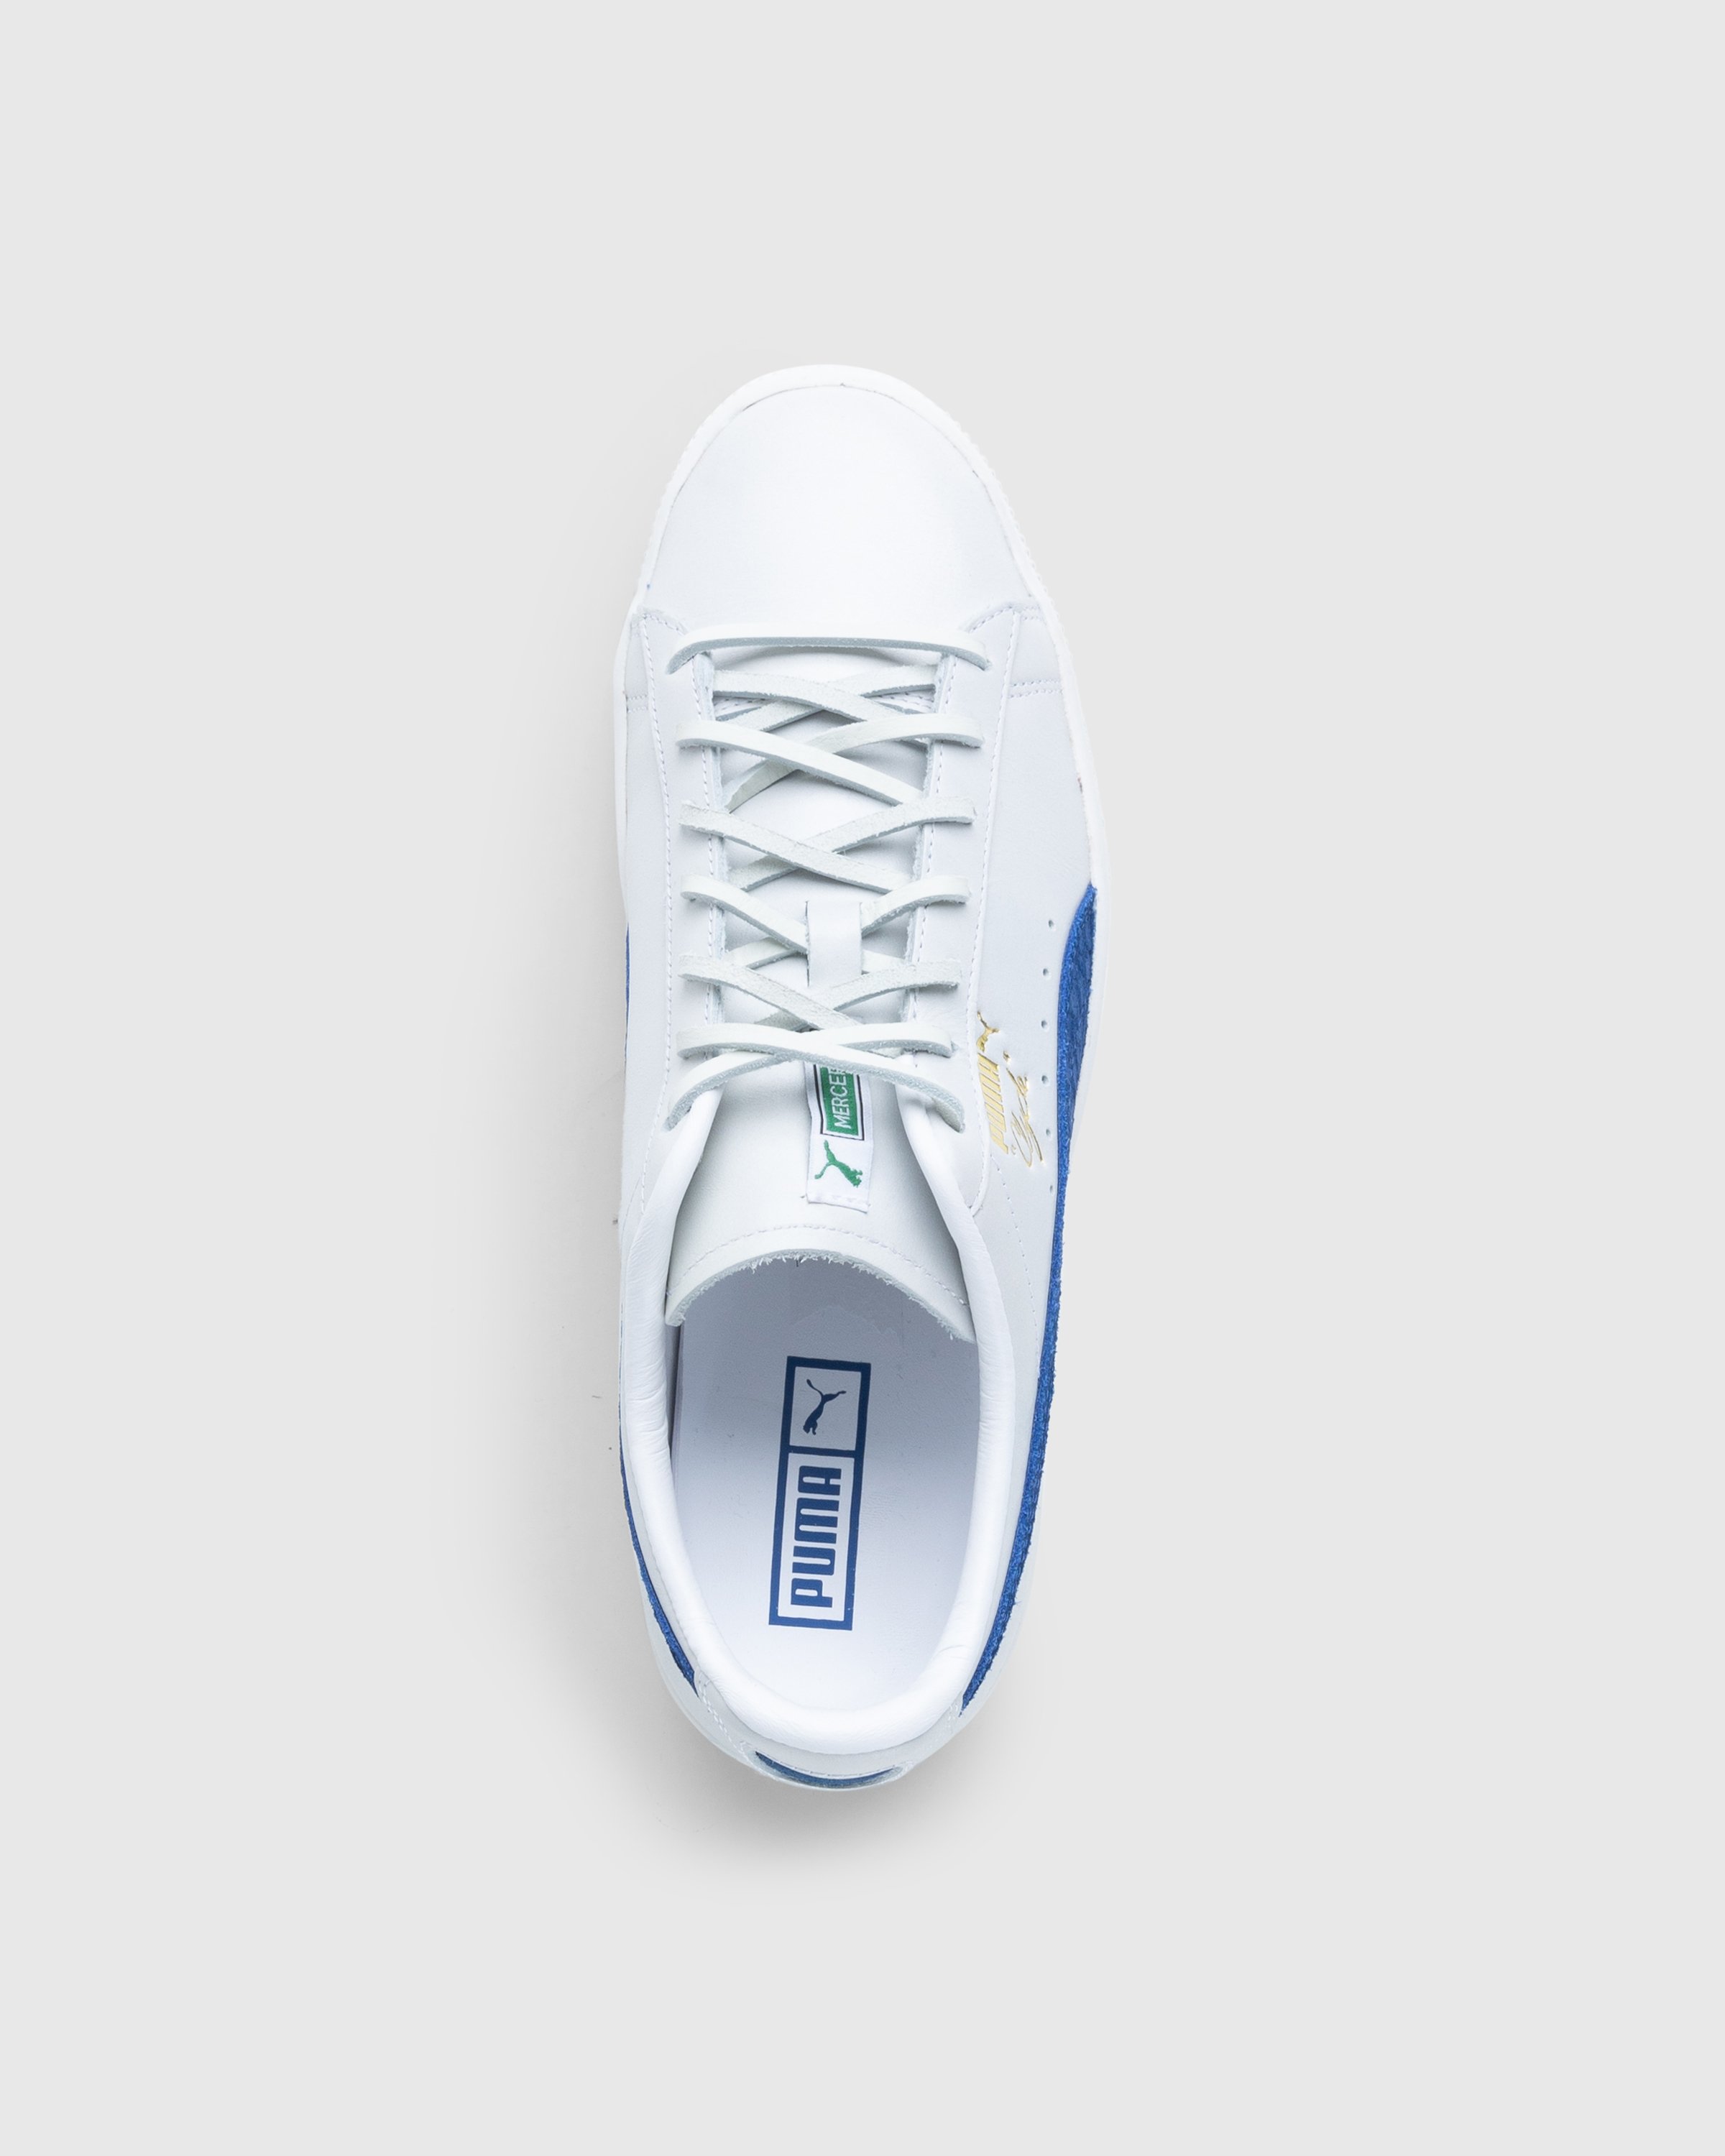 Puma - Clyde Soho (NYC) - Footwear - White - Image 5